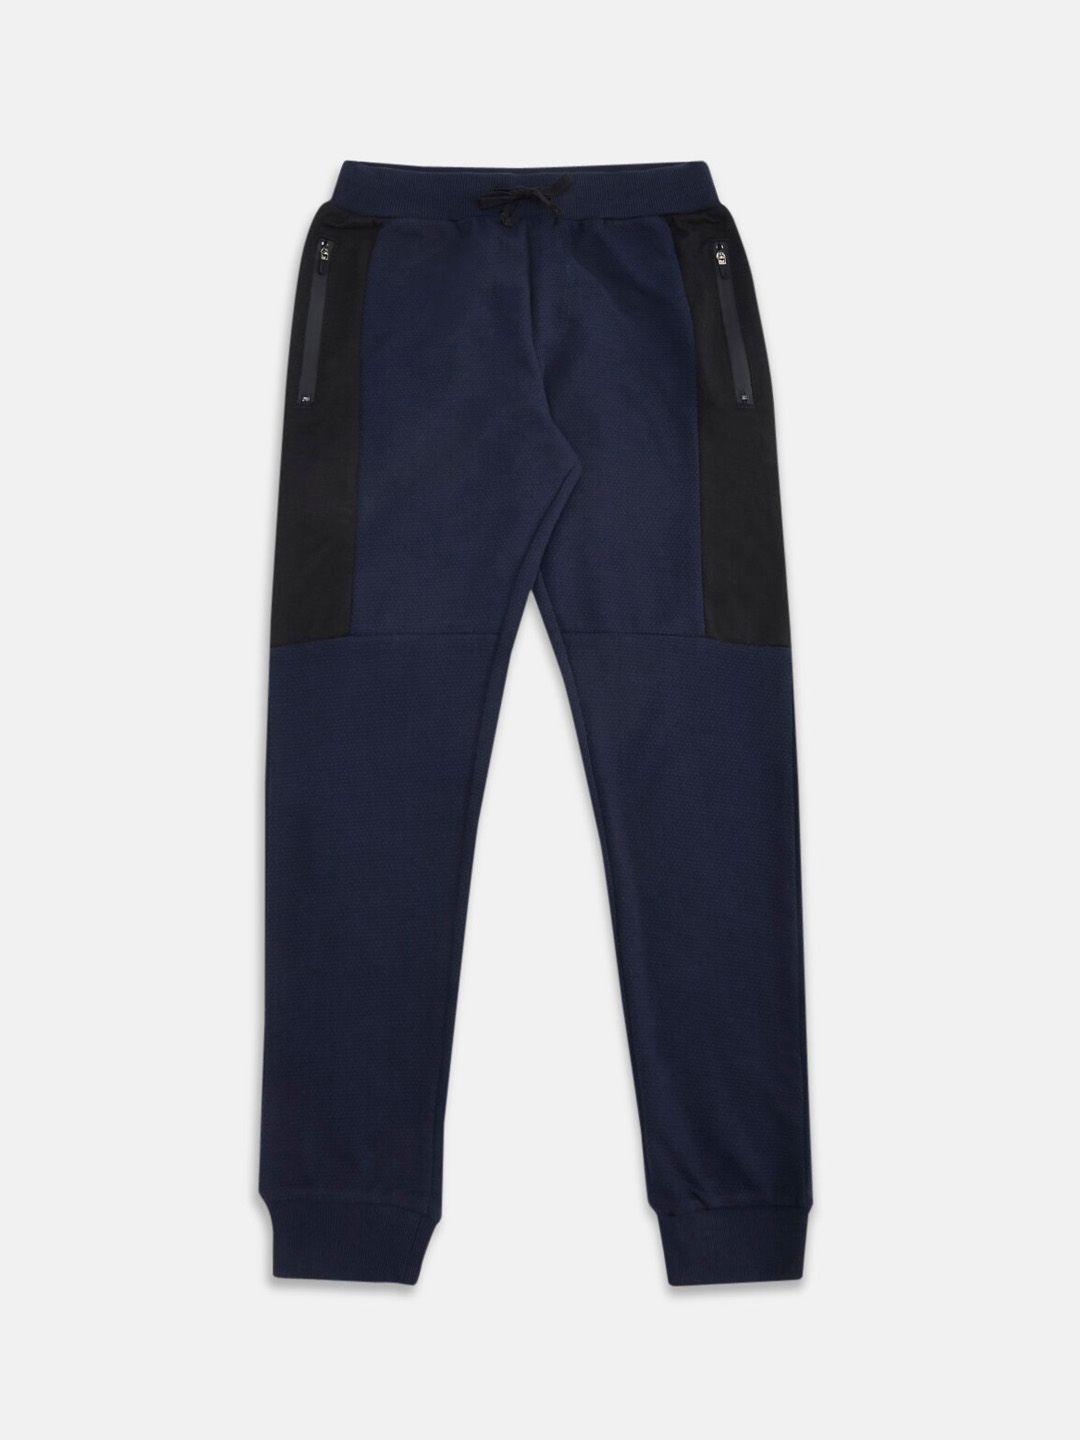 pantaloons junior boys navy blue solid pure cotton joggers